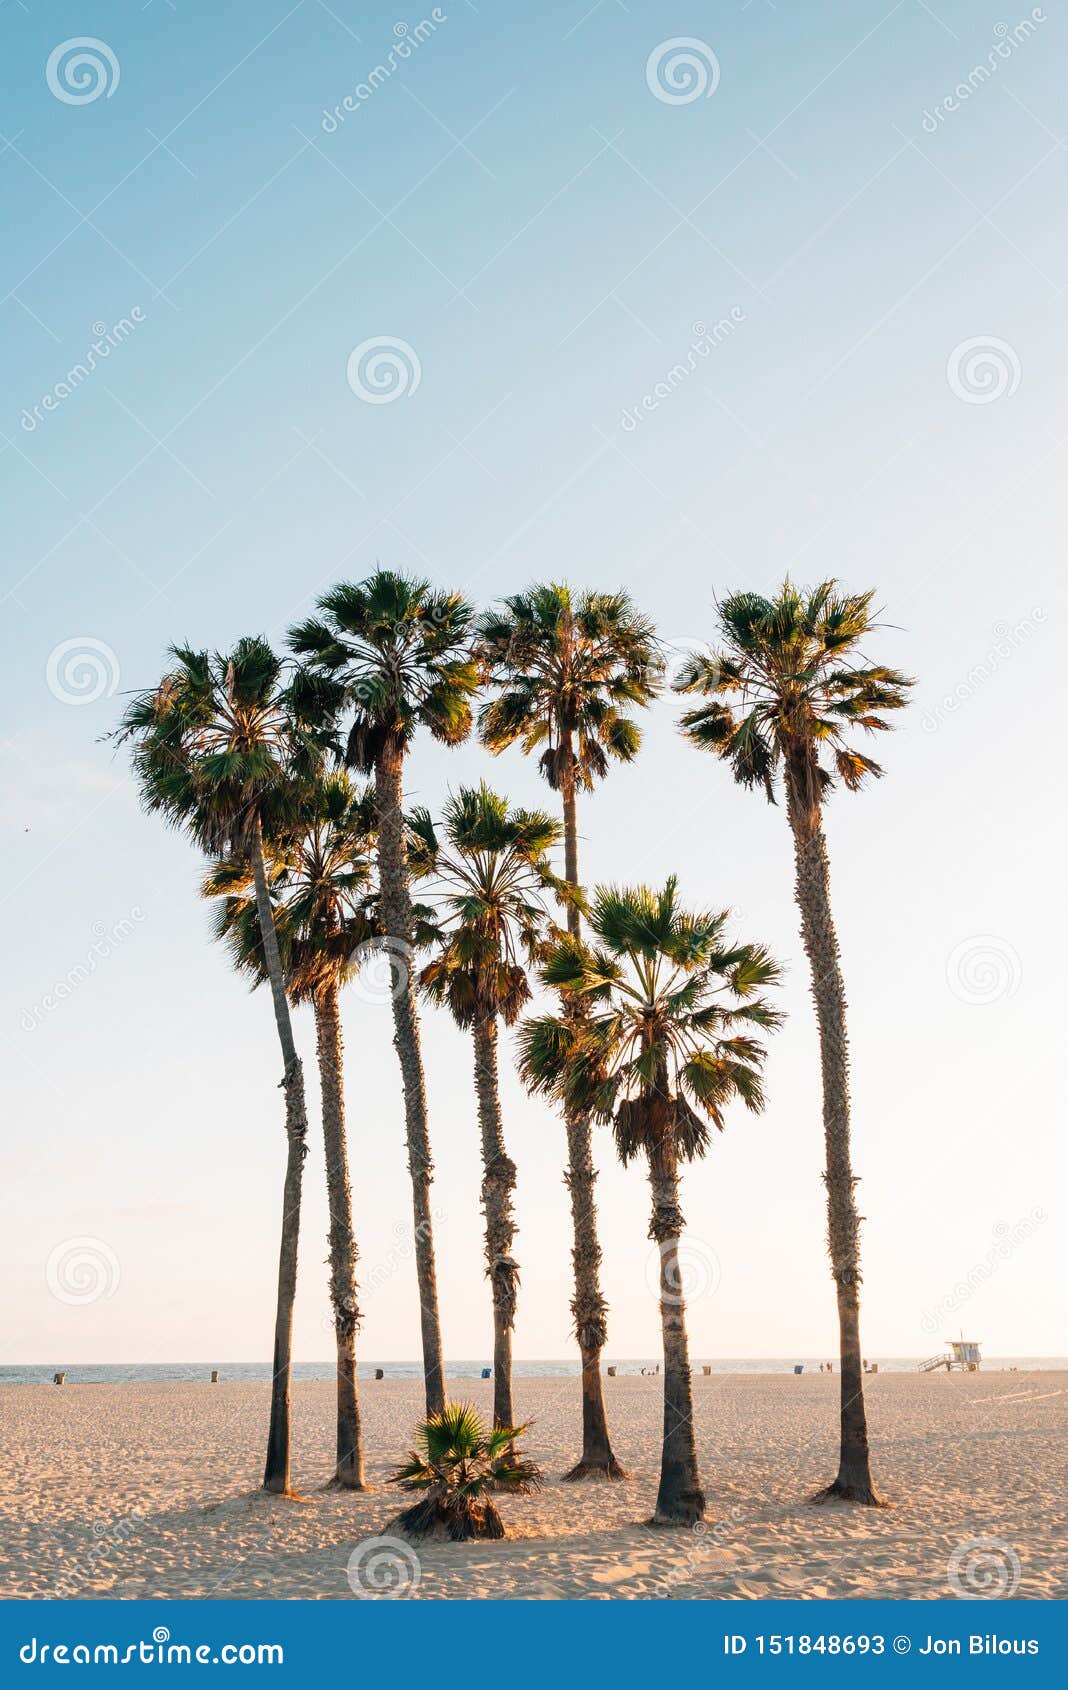 palm trees on the beach in santa monica, los angeles, california